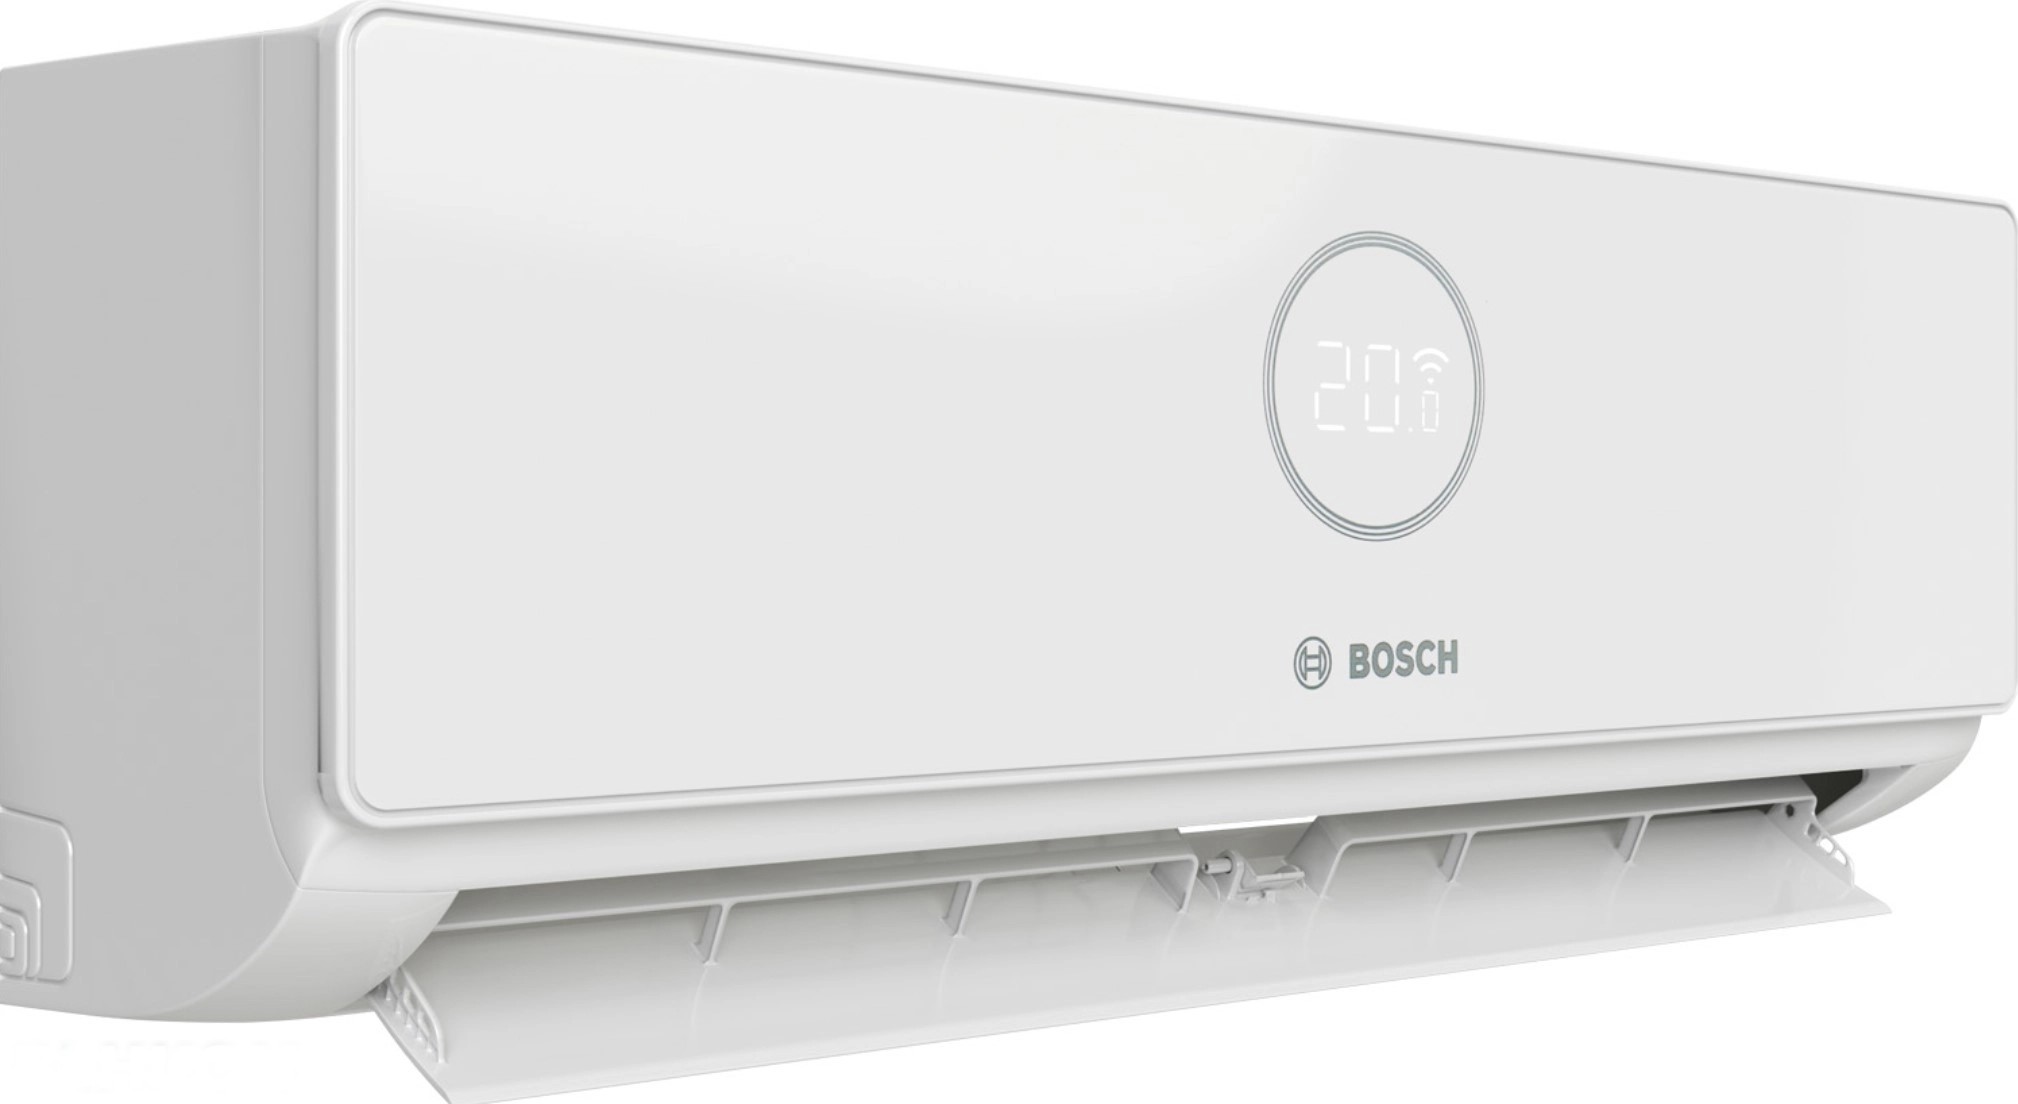 продаємо Bosch CL3000iU W 70 E, 7,0 кВт в Україні - фото 4